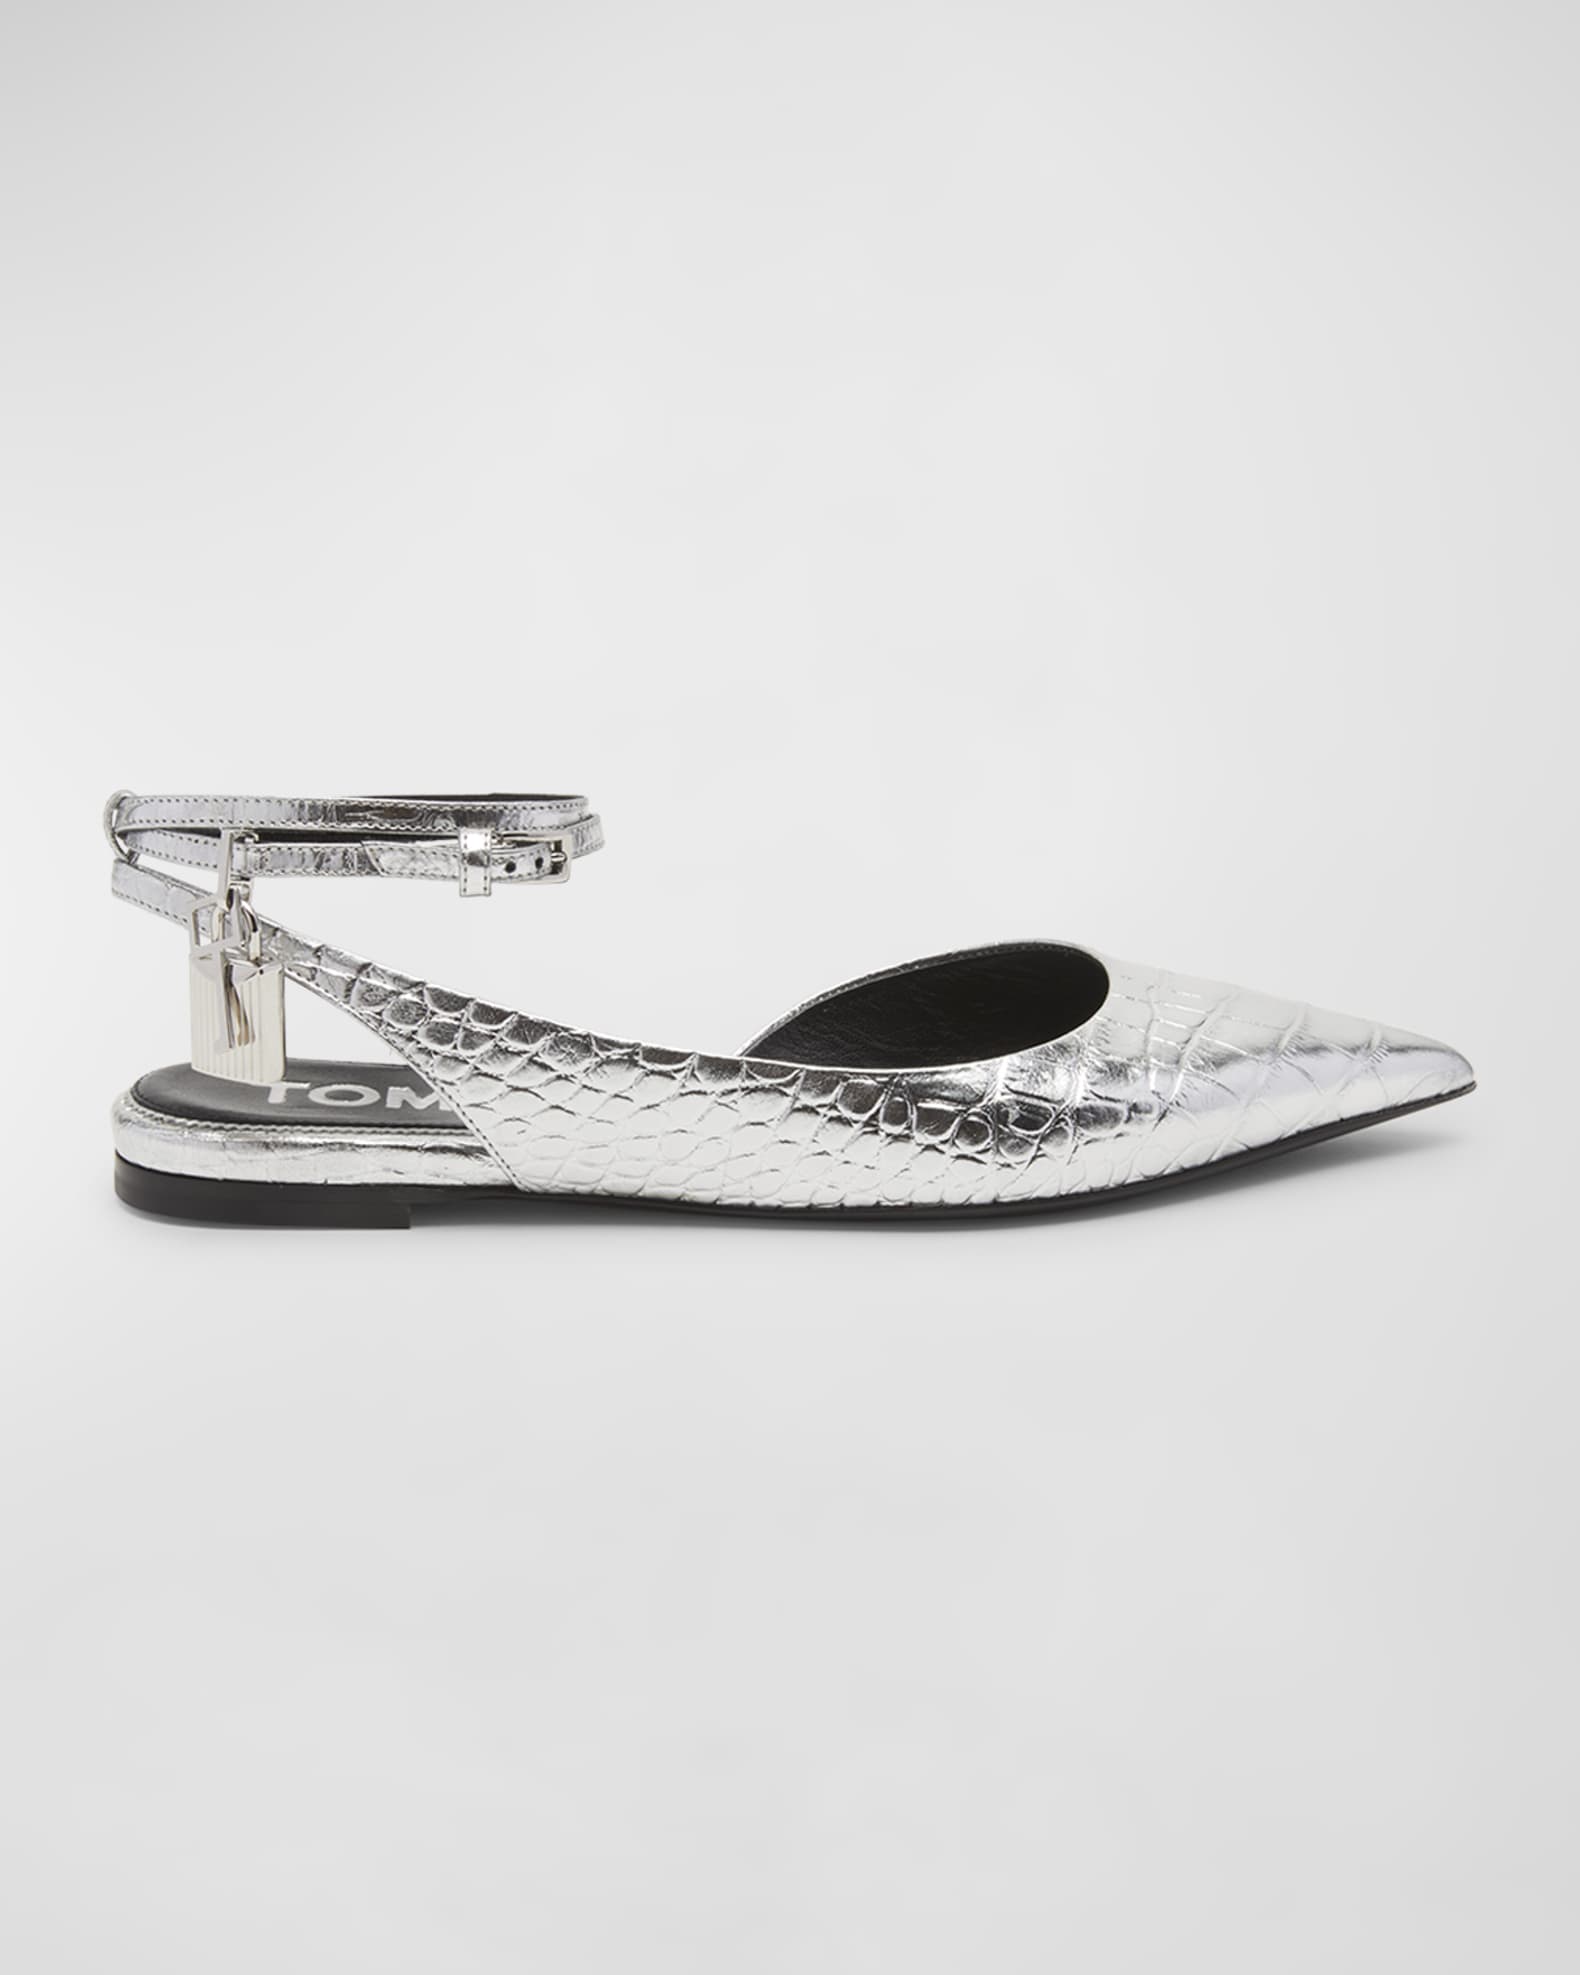 TOM FORD Lock Metallic Croco Ankle-Strap Ballerina Flats | Neiman Marcus